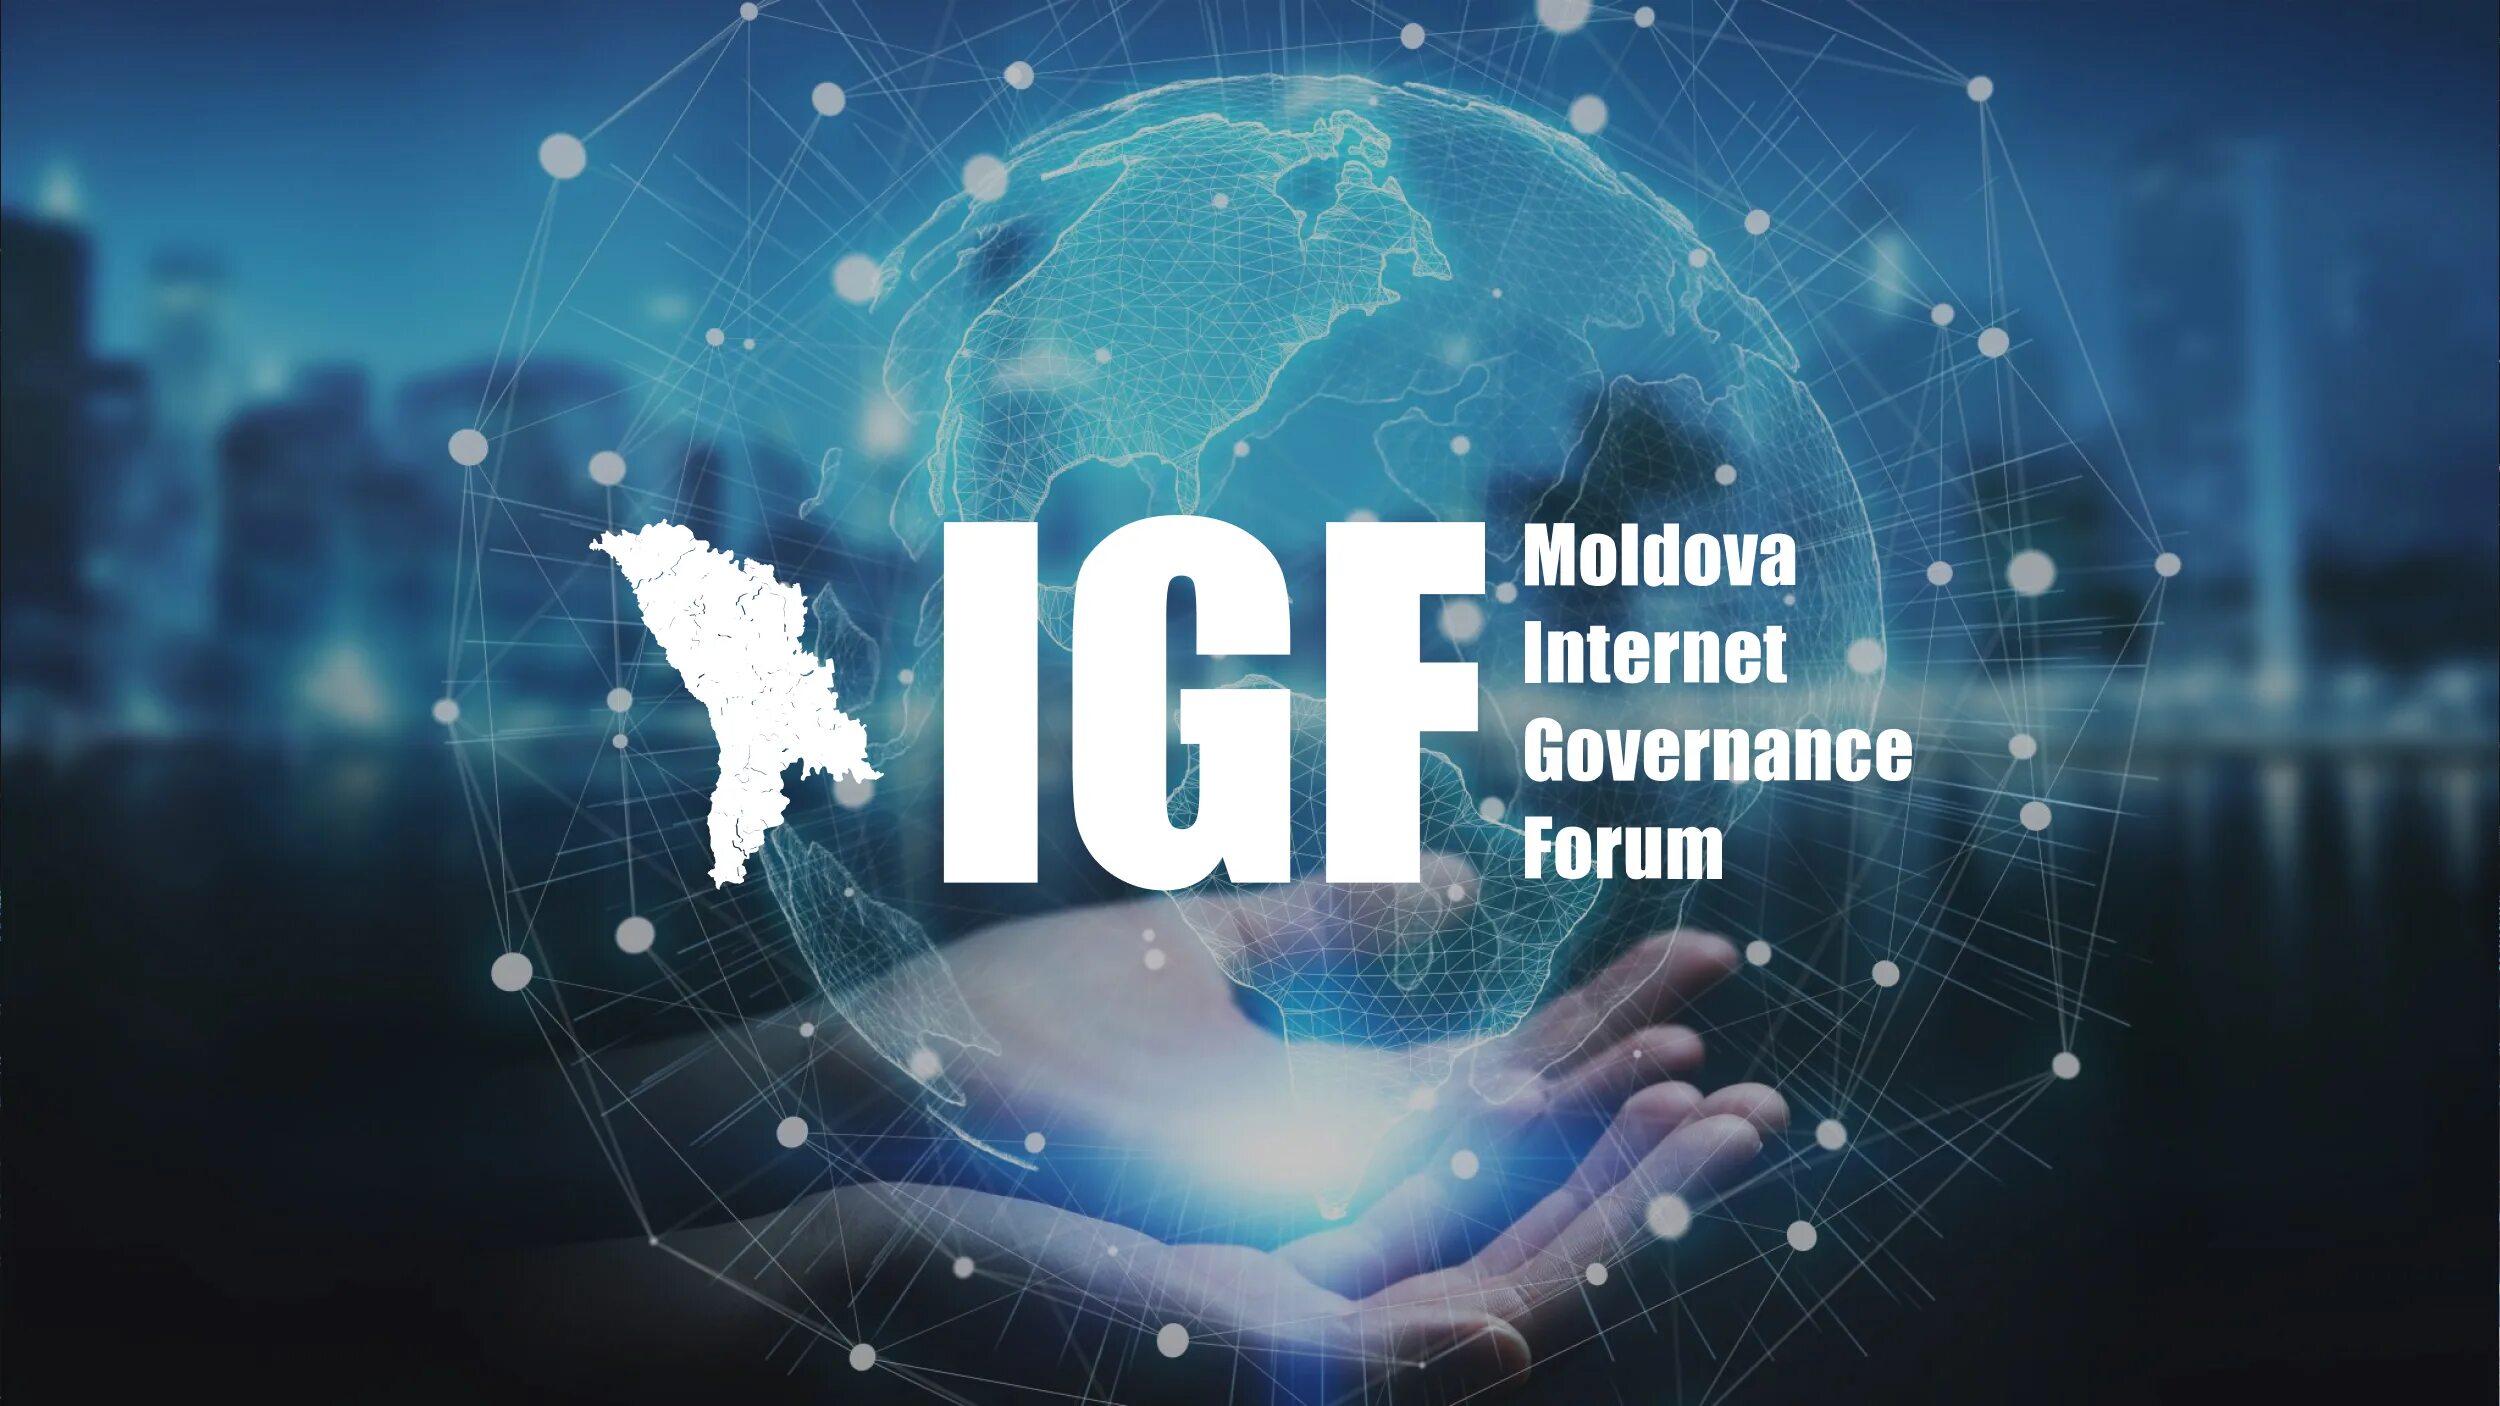 Интернет в молдове. Internet Governance forum, IGF. Молдова криптовалюта. XVII Internet Governance forum, IGF.